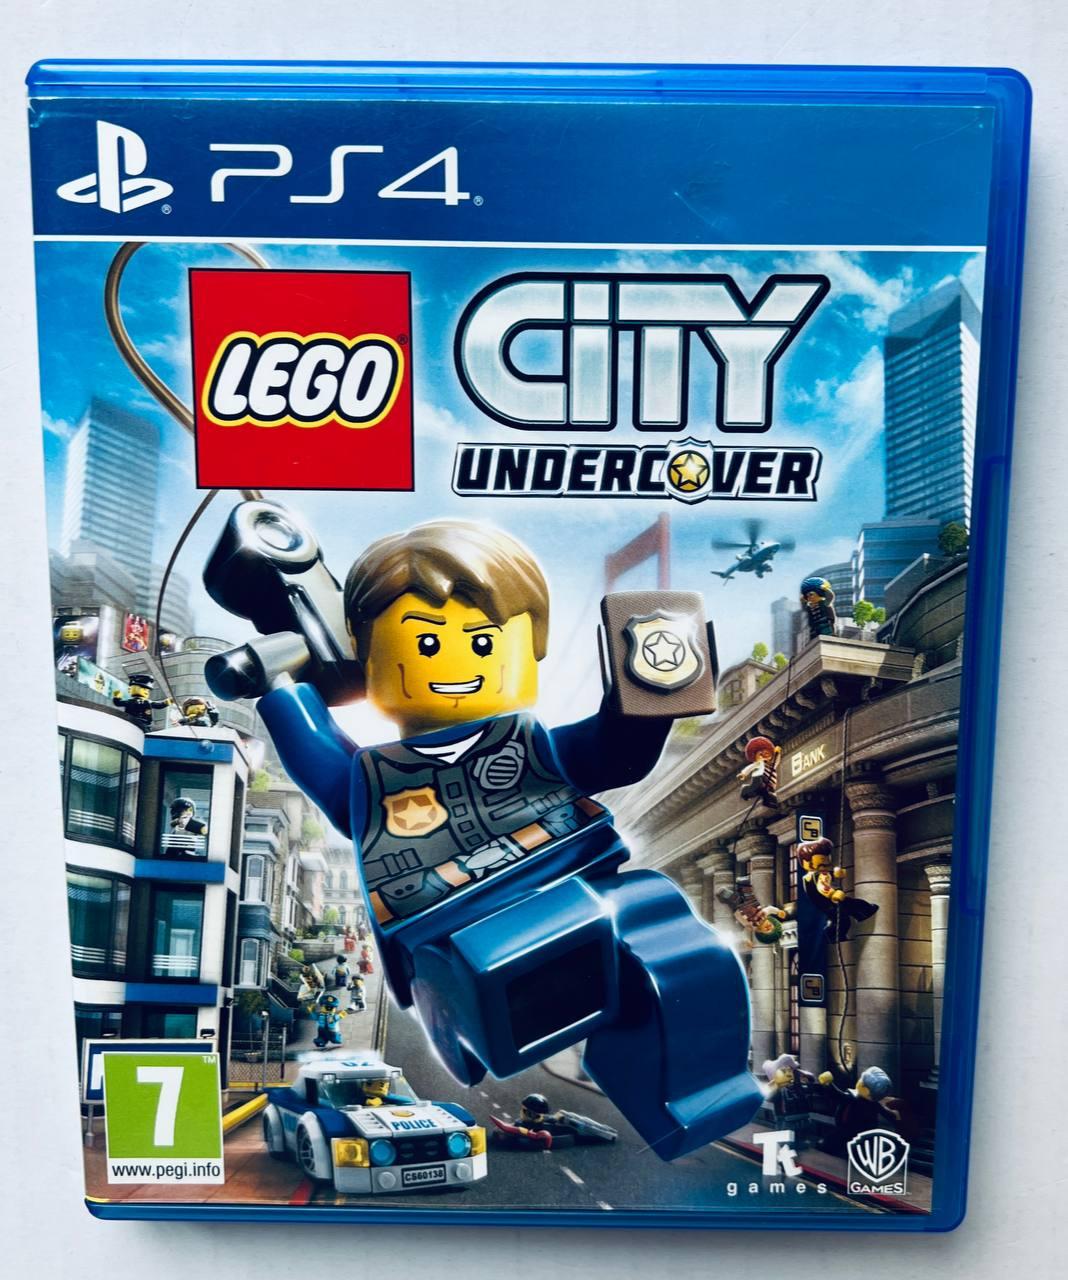 LEGO City Undercover, Б/У, російська версія - диск для PlayStation 4